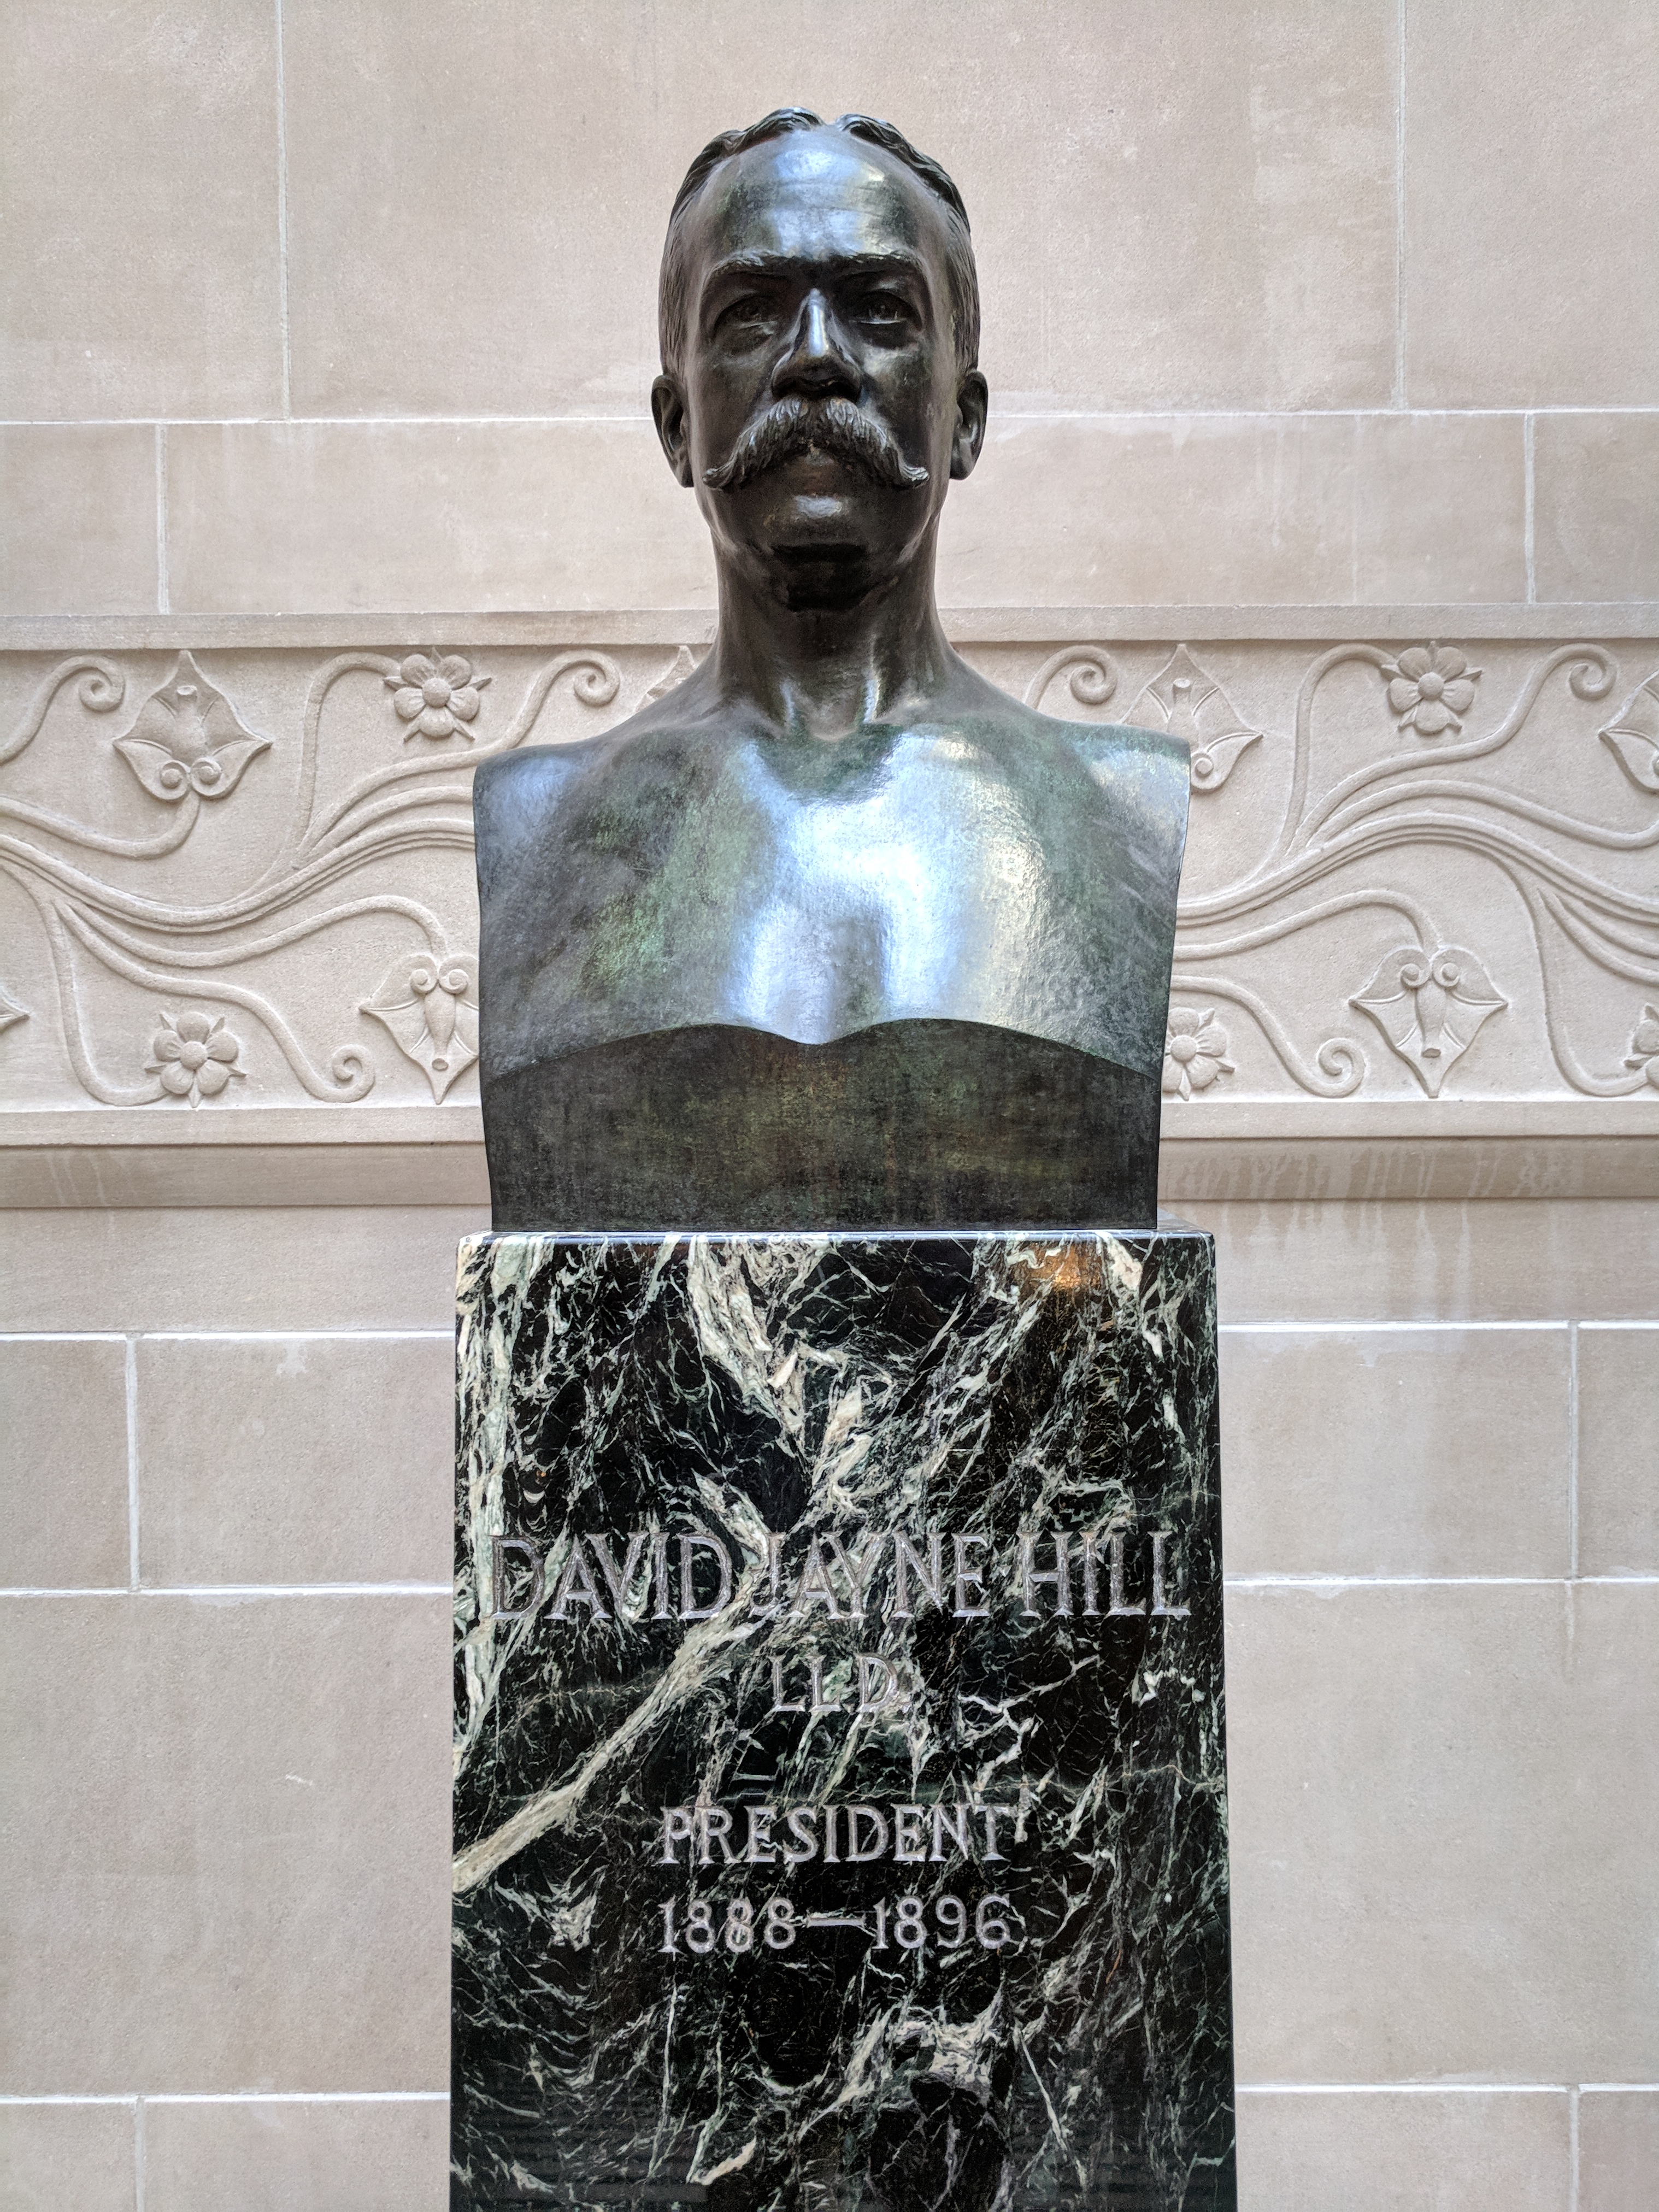 Bust of David Jayne Hill